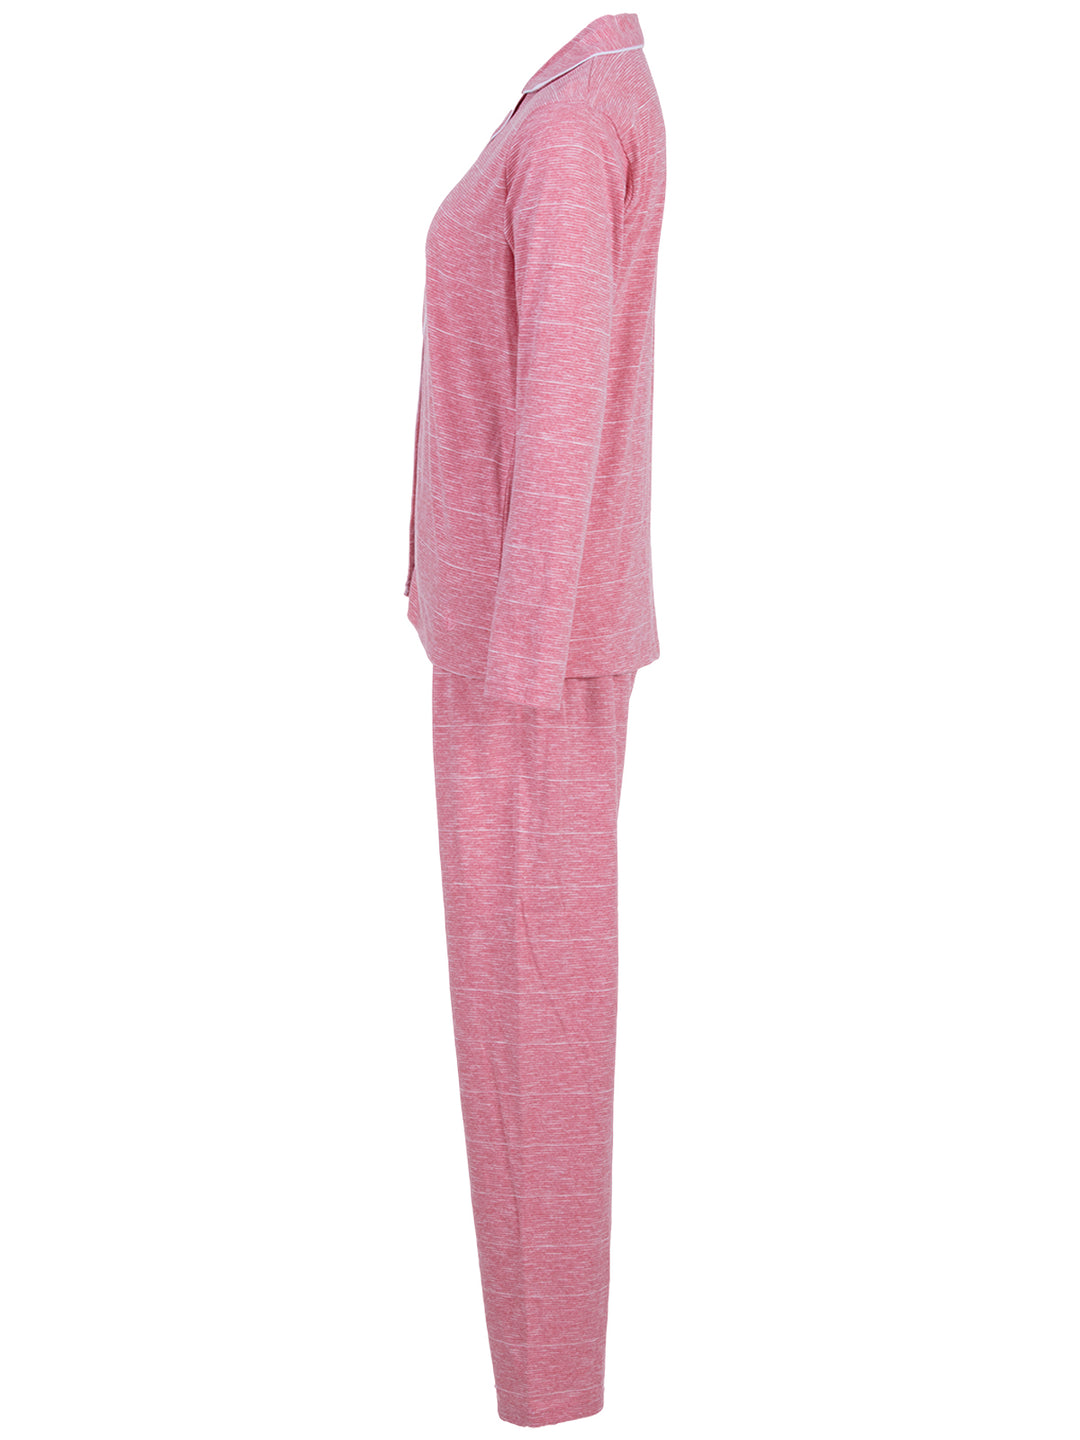 Pyjama Set Langarm - Melange Streifen